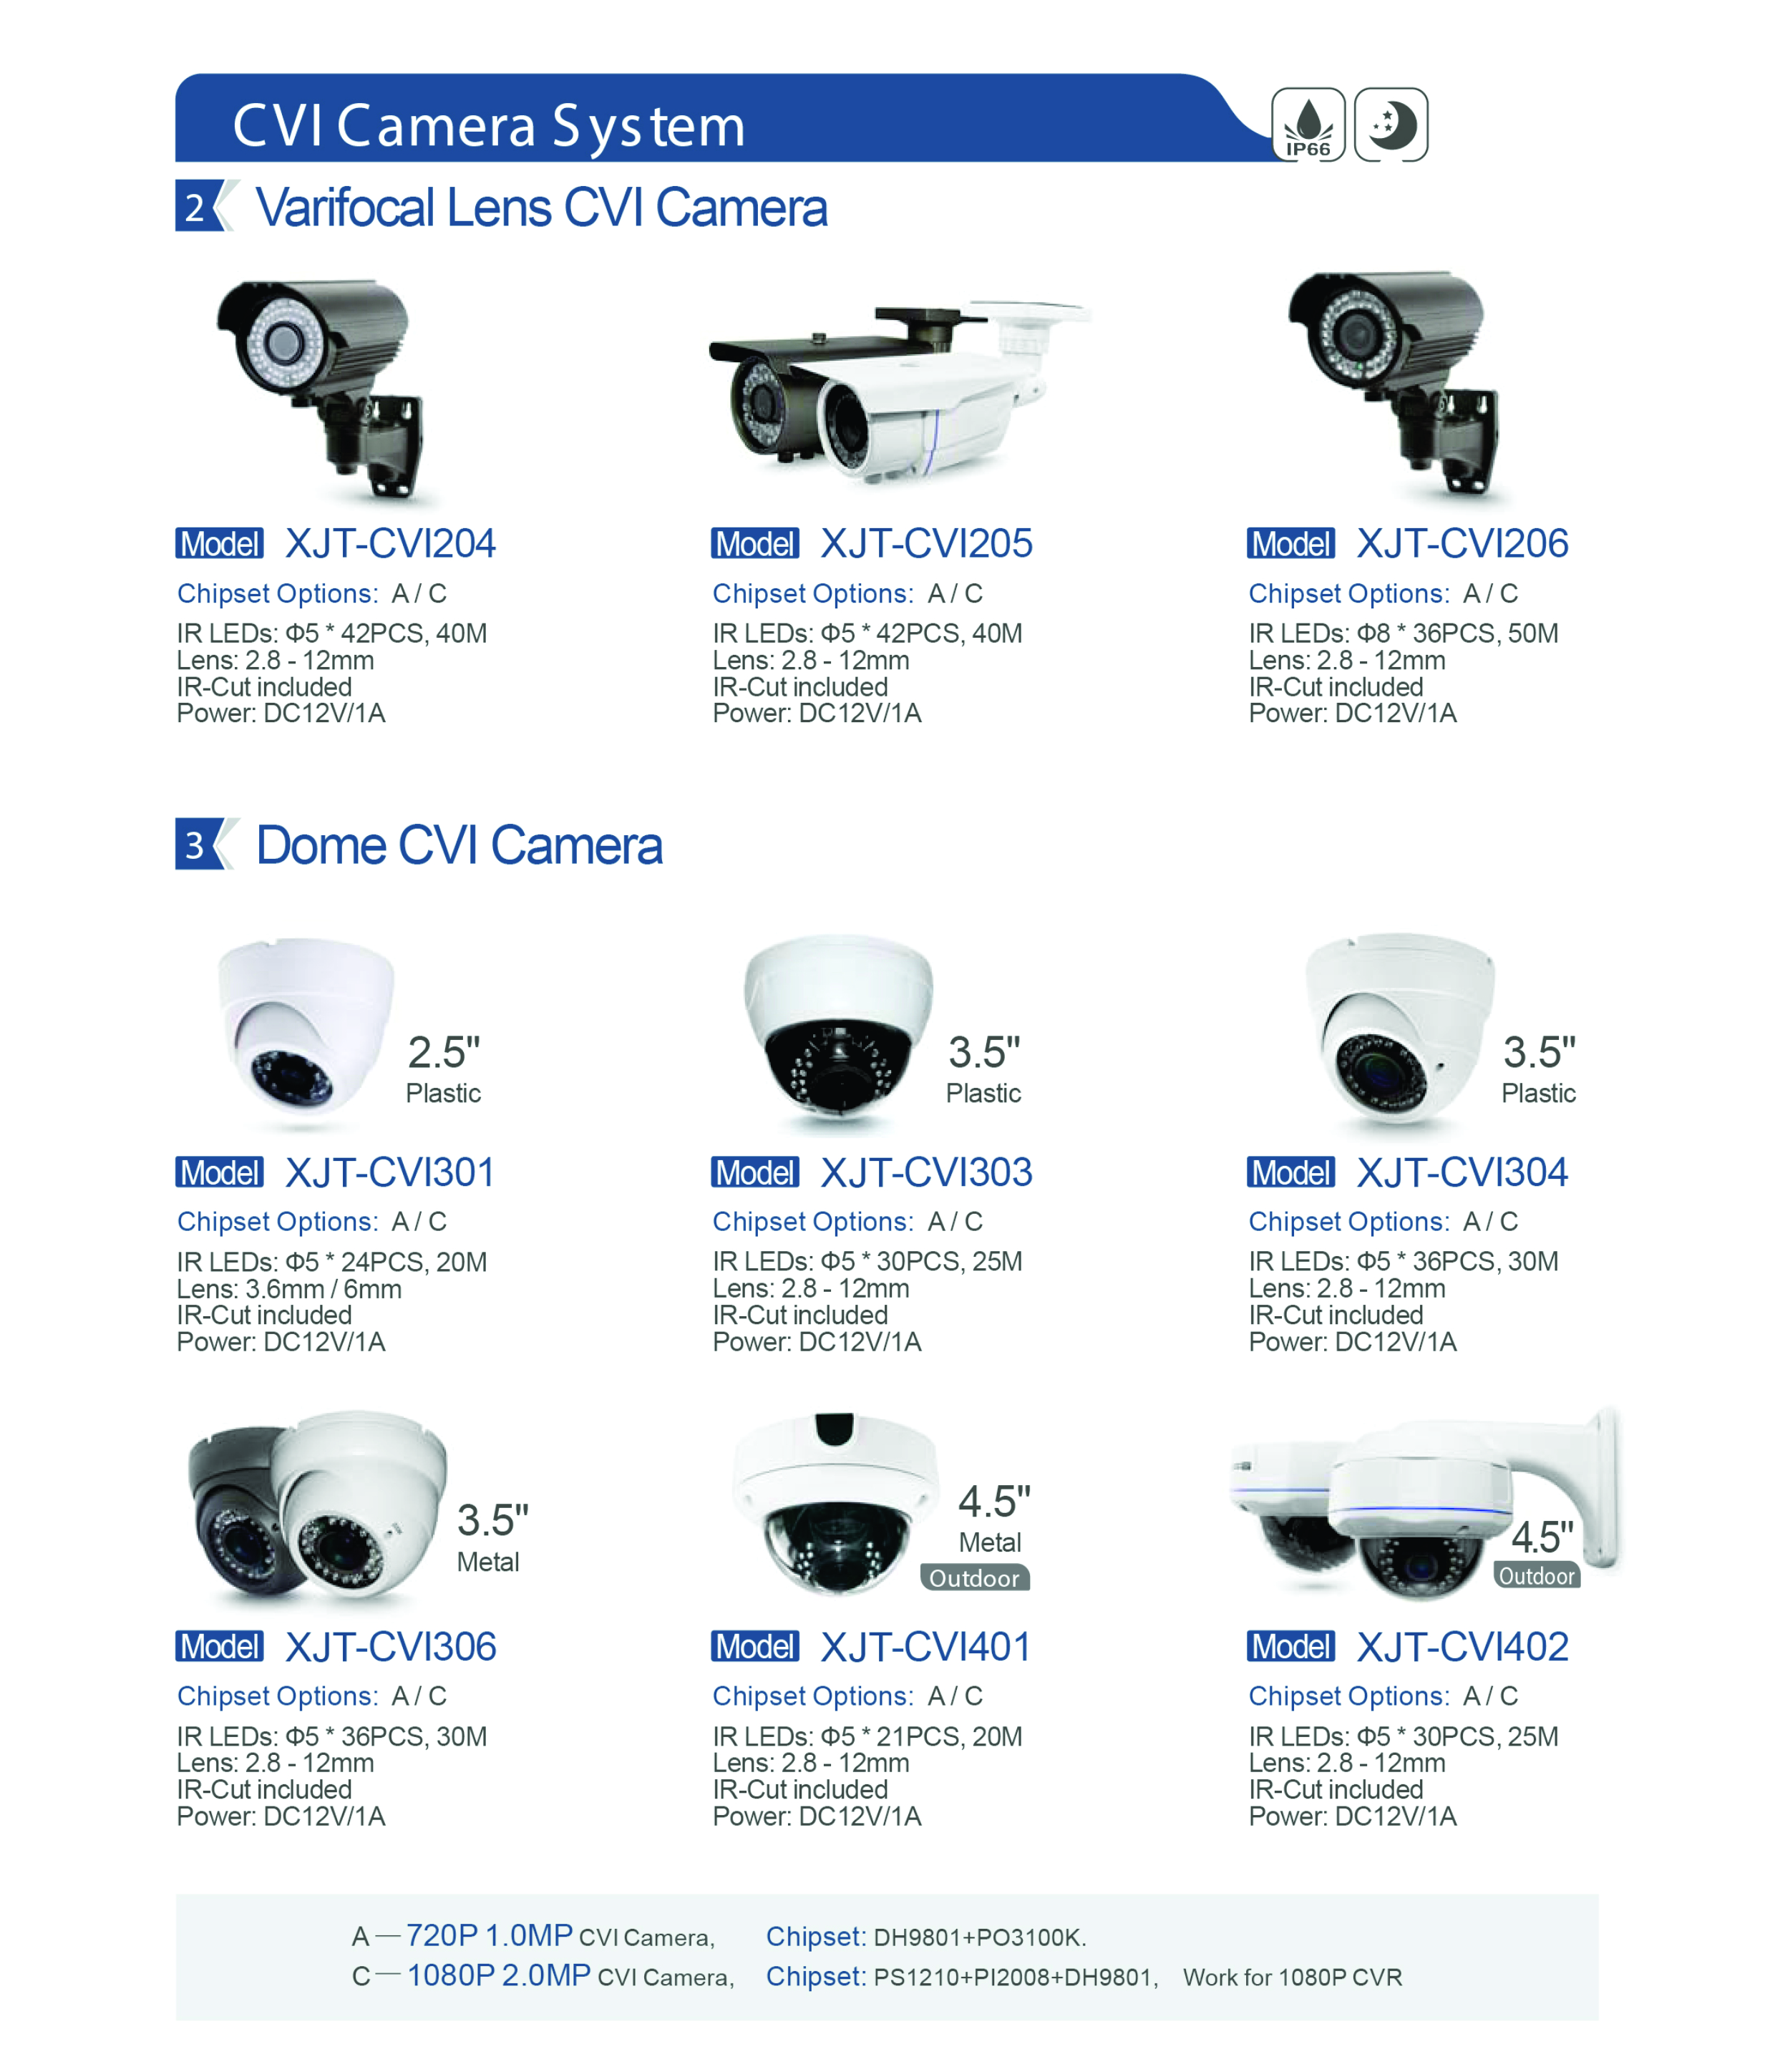 CVI Camera System